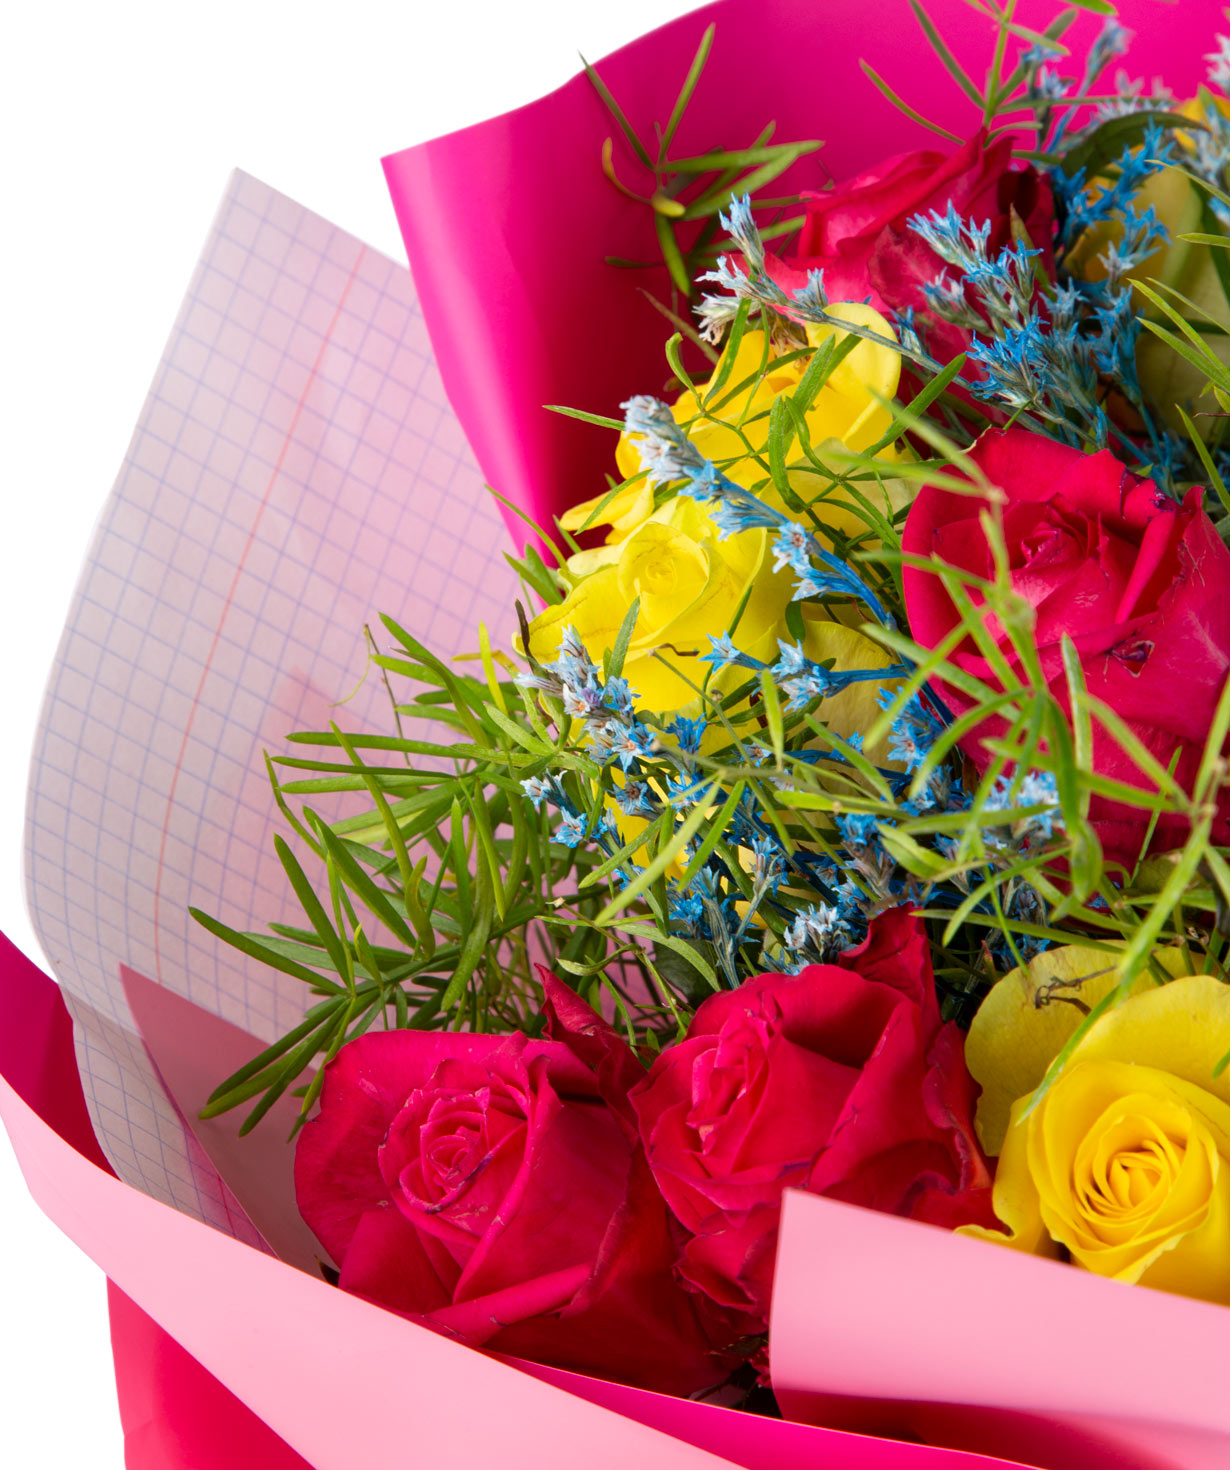 Bouquet `Billun` wit roses and field flowers